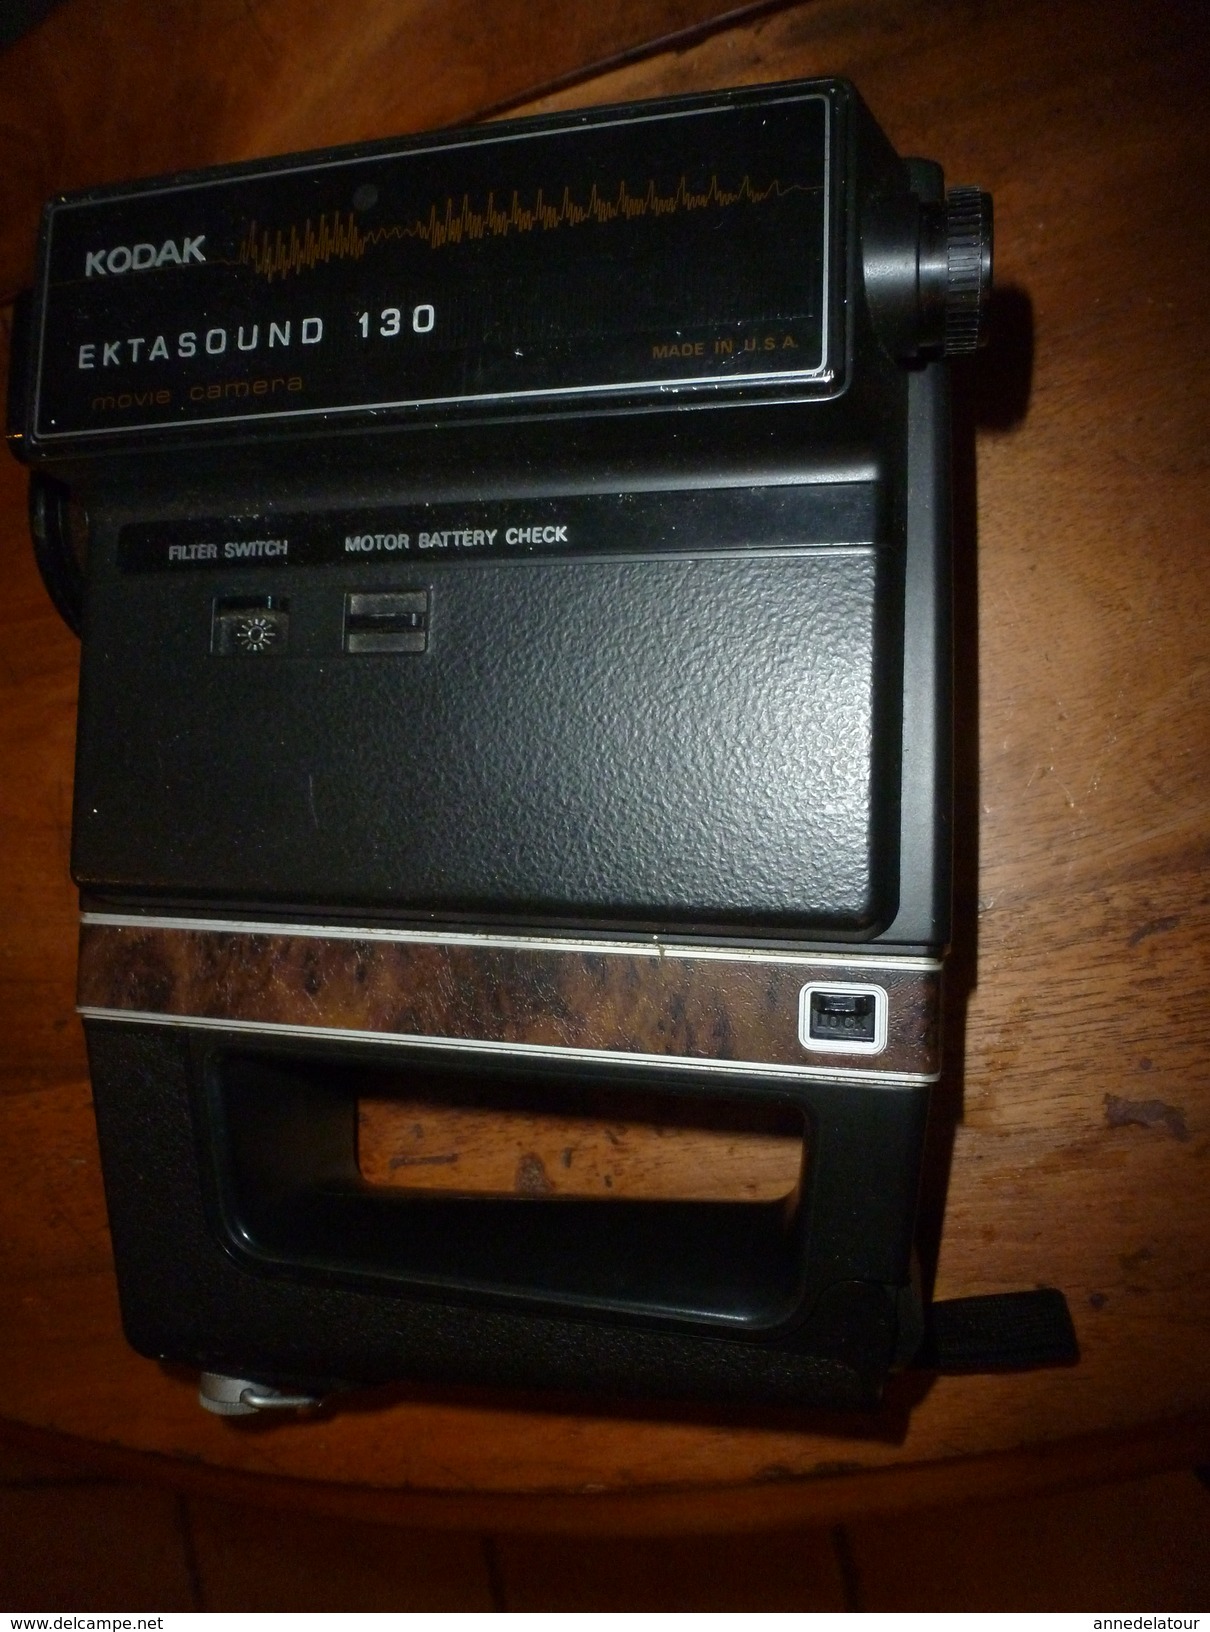 KODAK EKTASOUND 130 Movie Caméra :  Avec Notice Et Boite D'origine  (année De Fabrication Probable, Vers 1973) - Videocamere